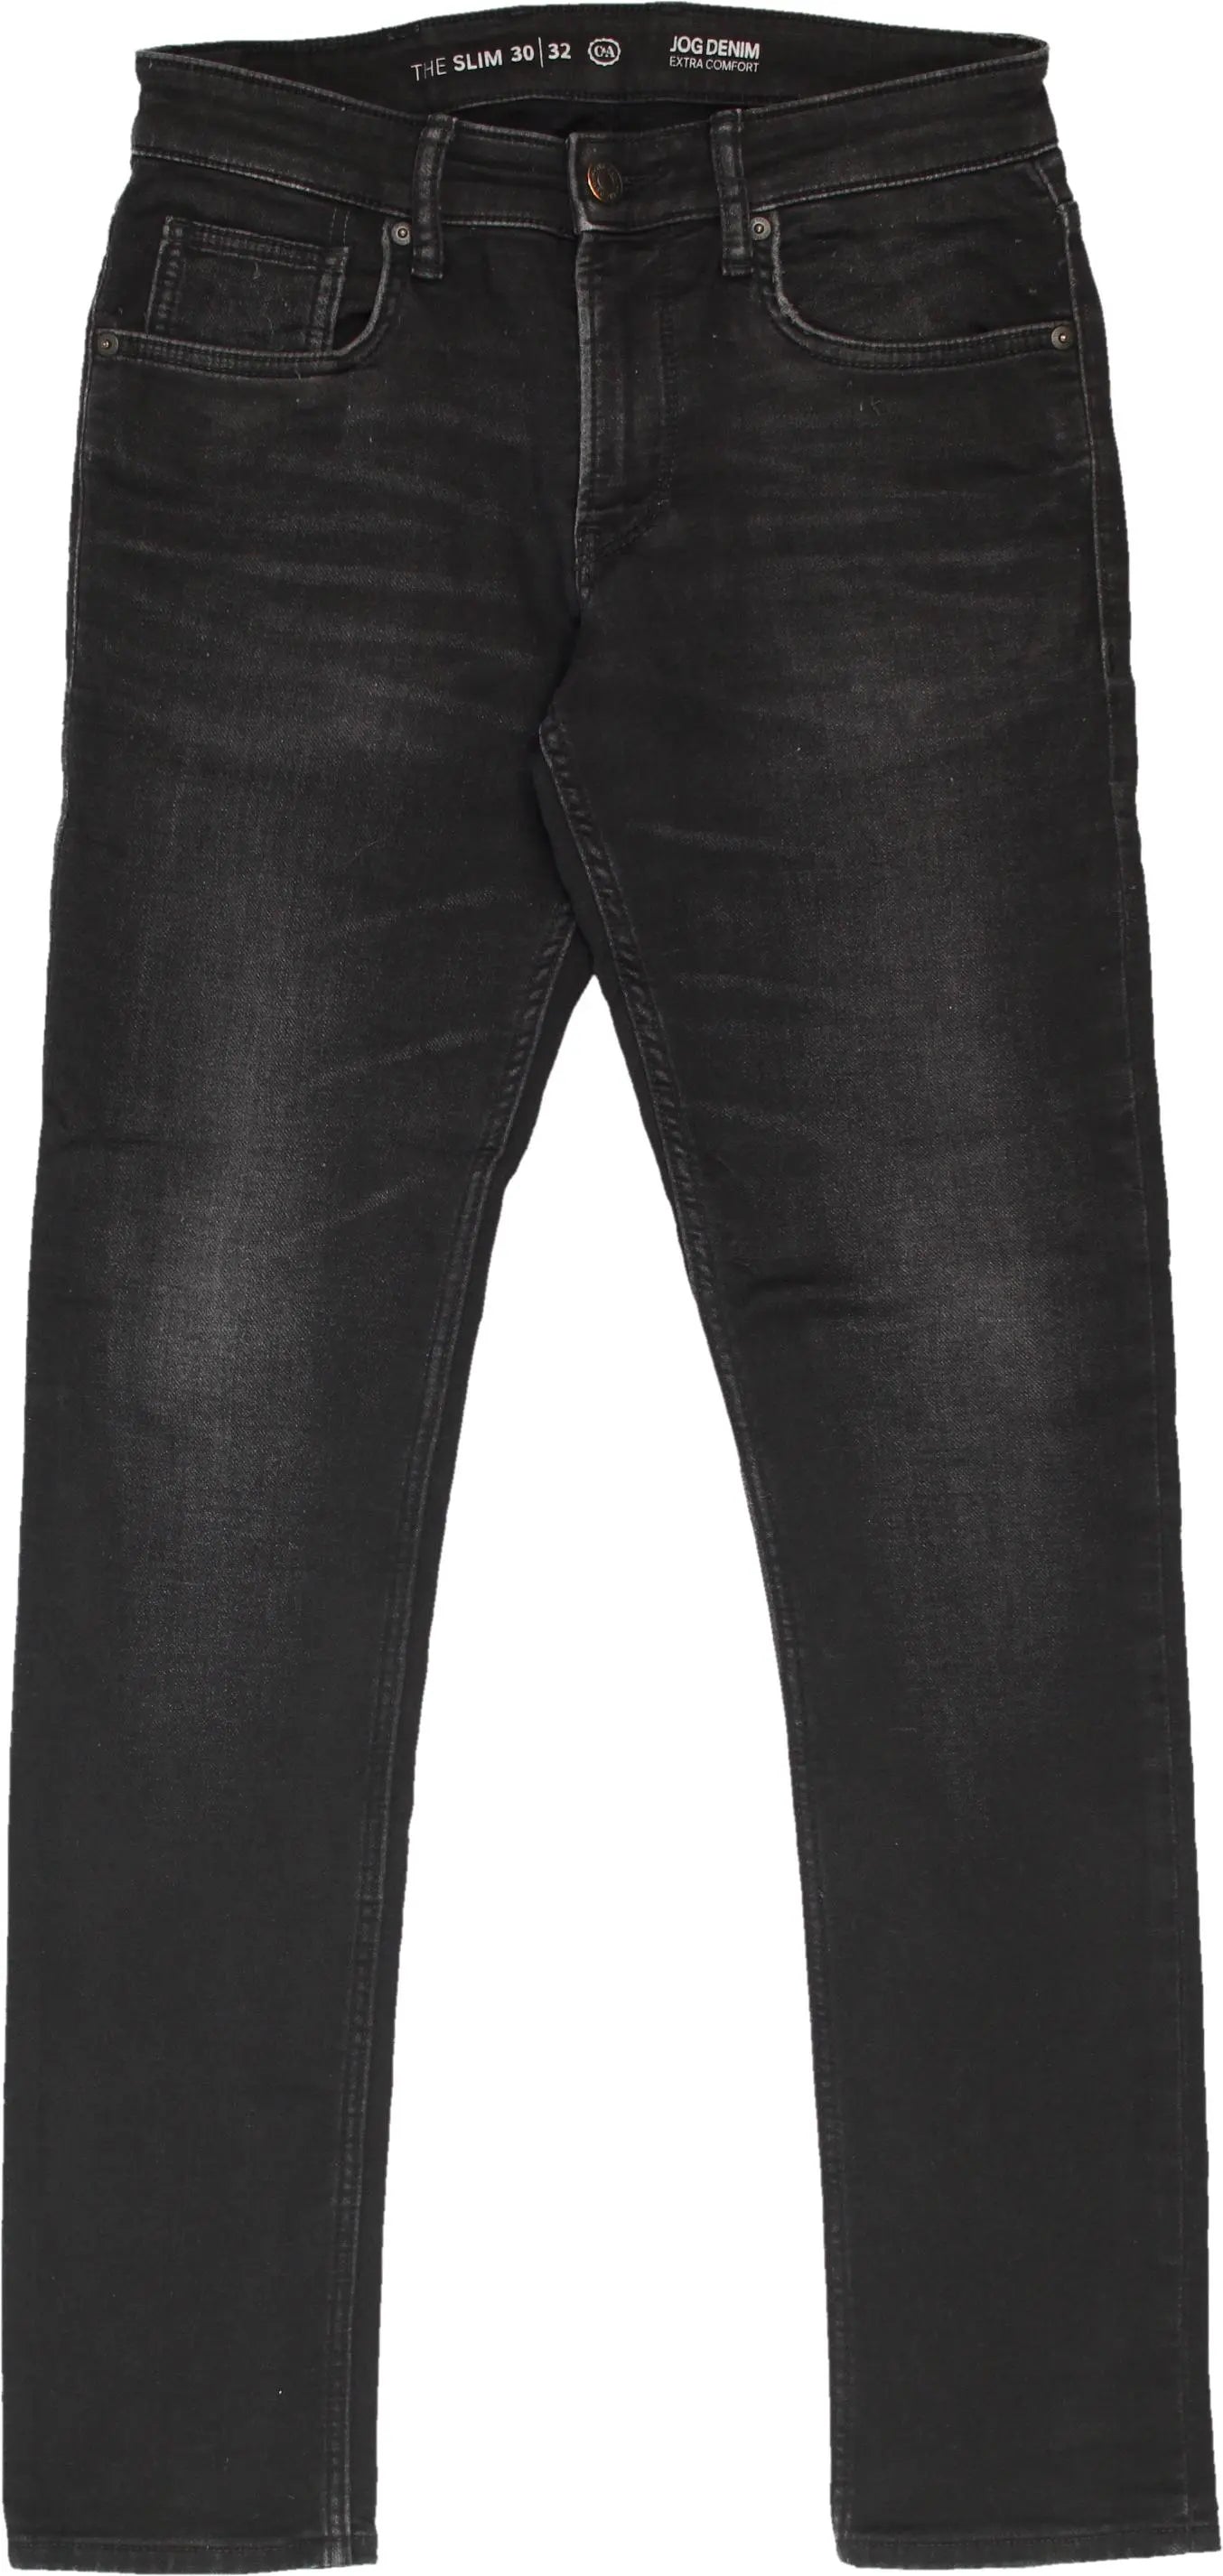 C&A - Jog Denim Slim Fit Jeans- ThriftTale.com - Vintage and second handclothing